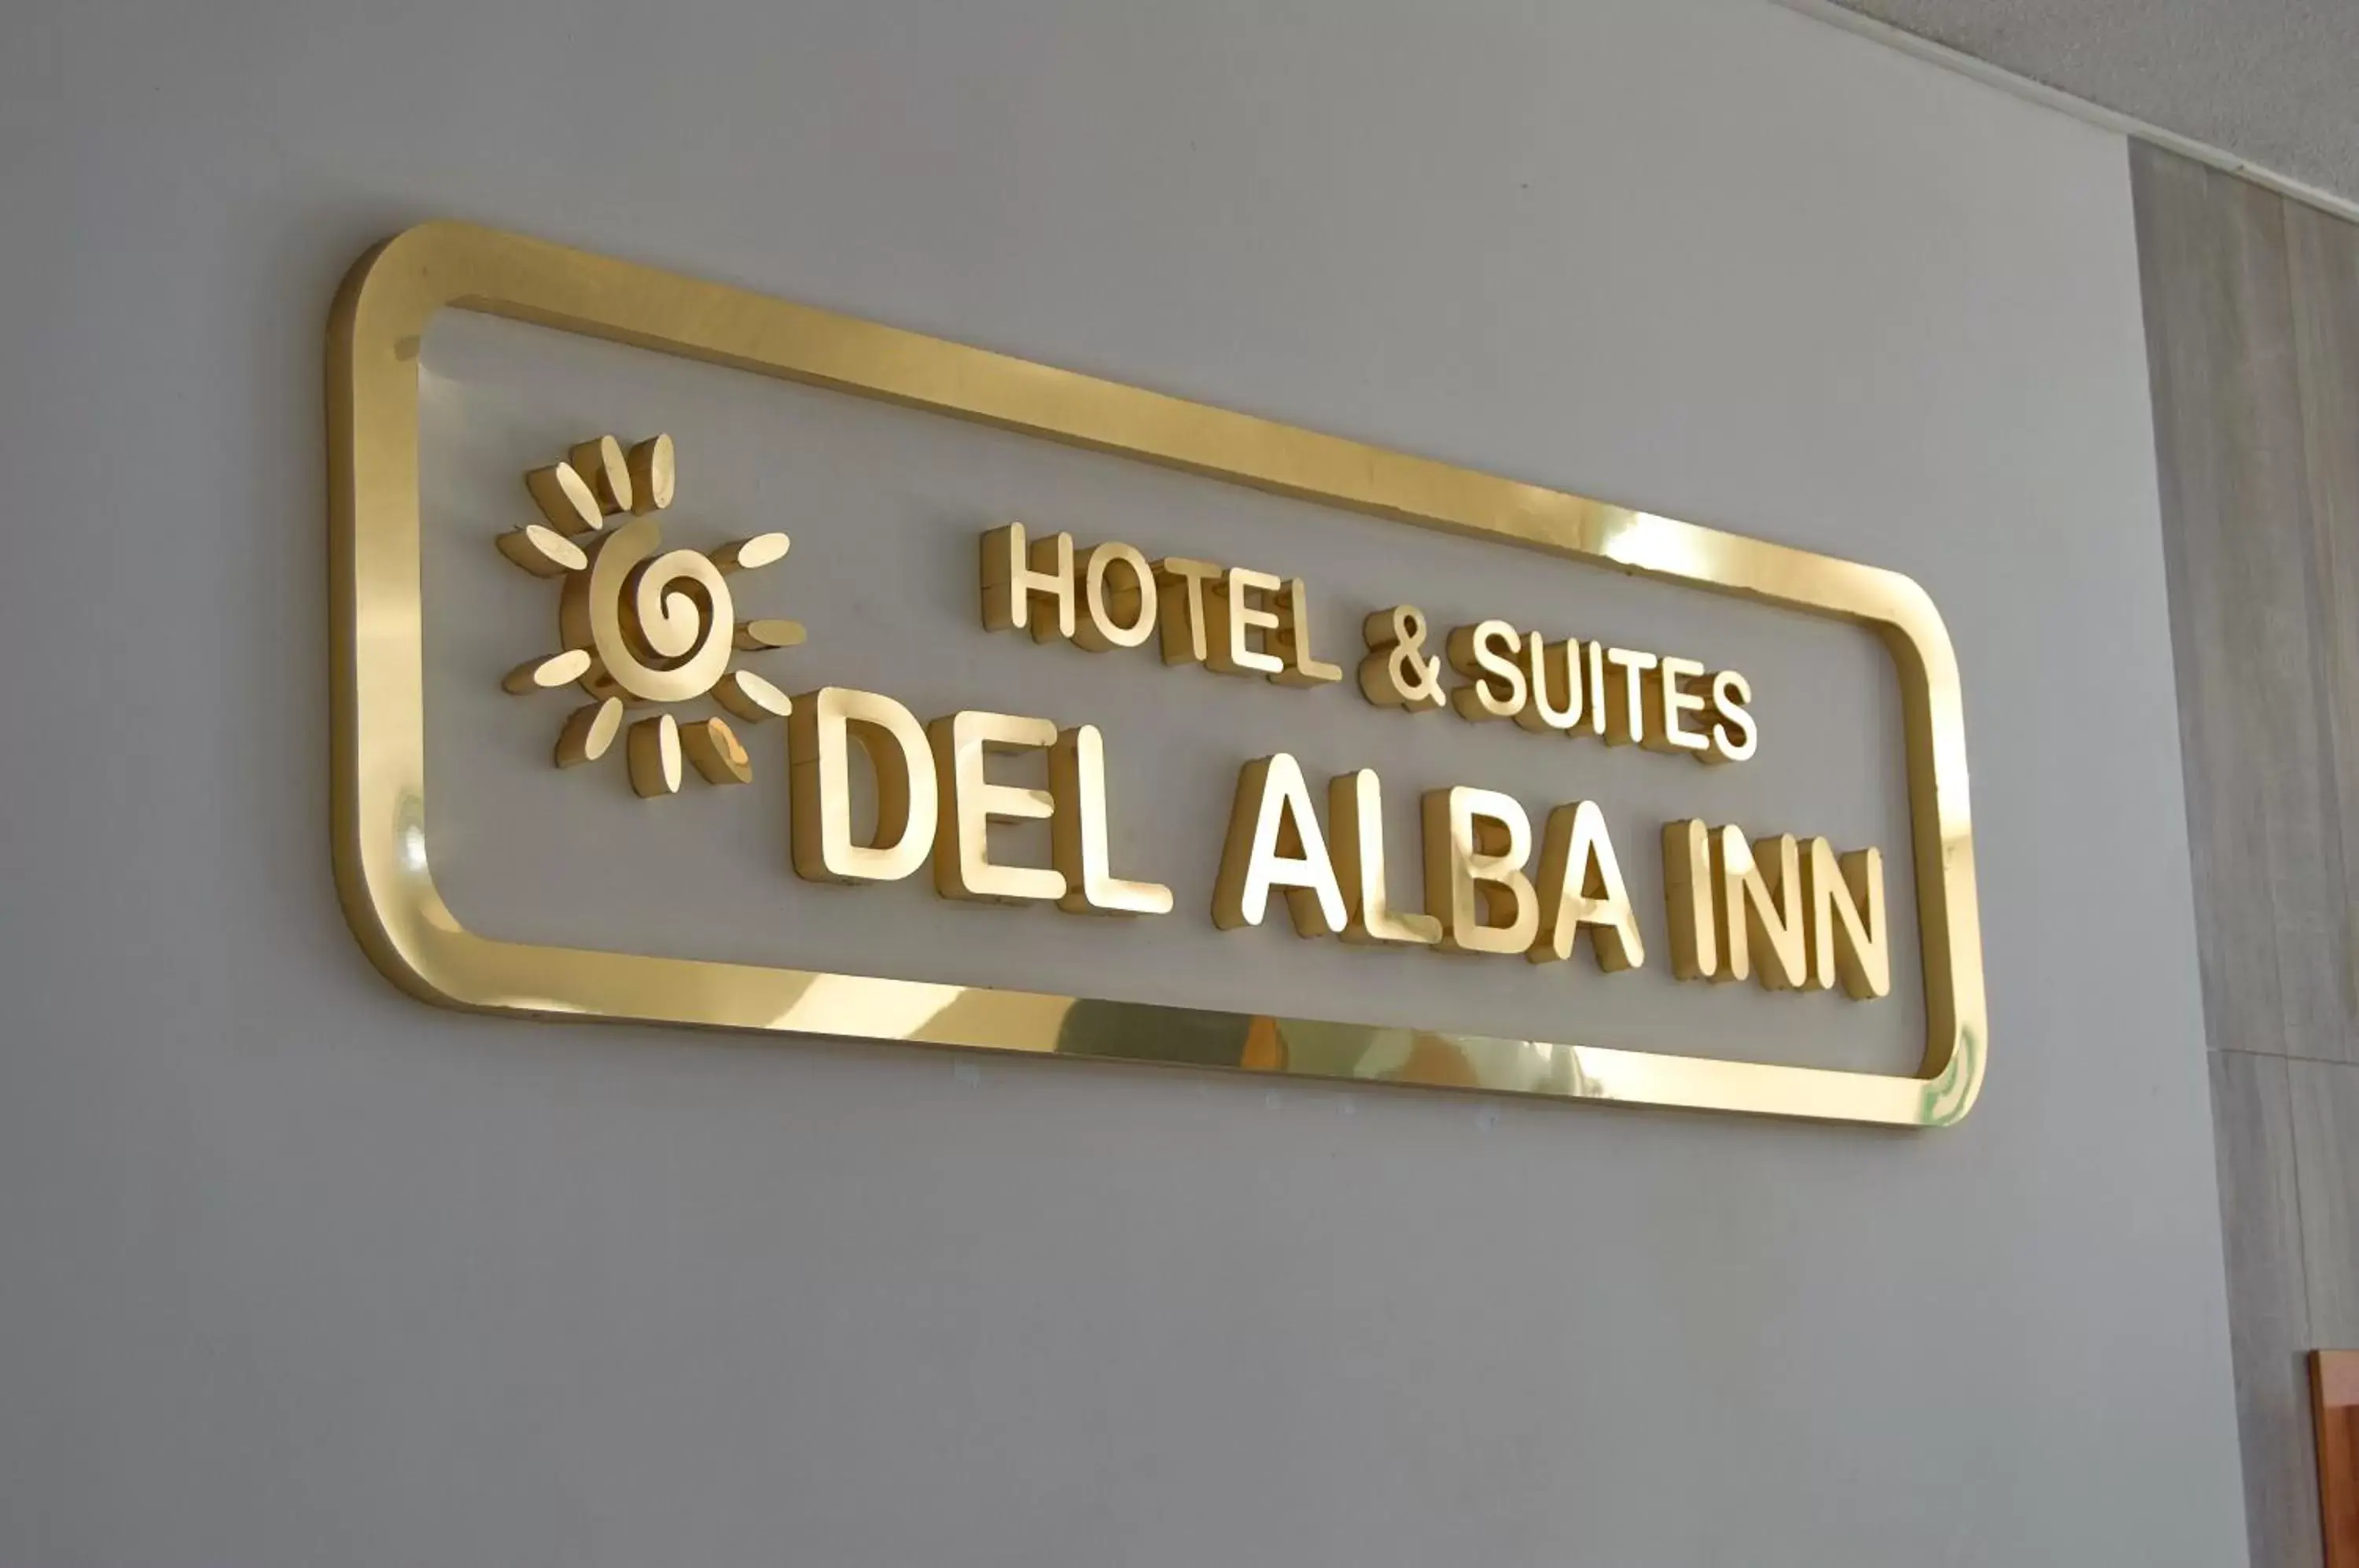 Property logo or sign in Hotel del Alba Inn & Suites